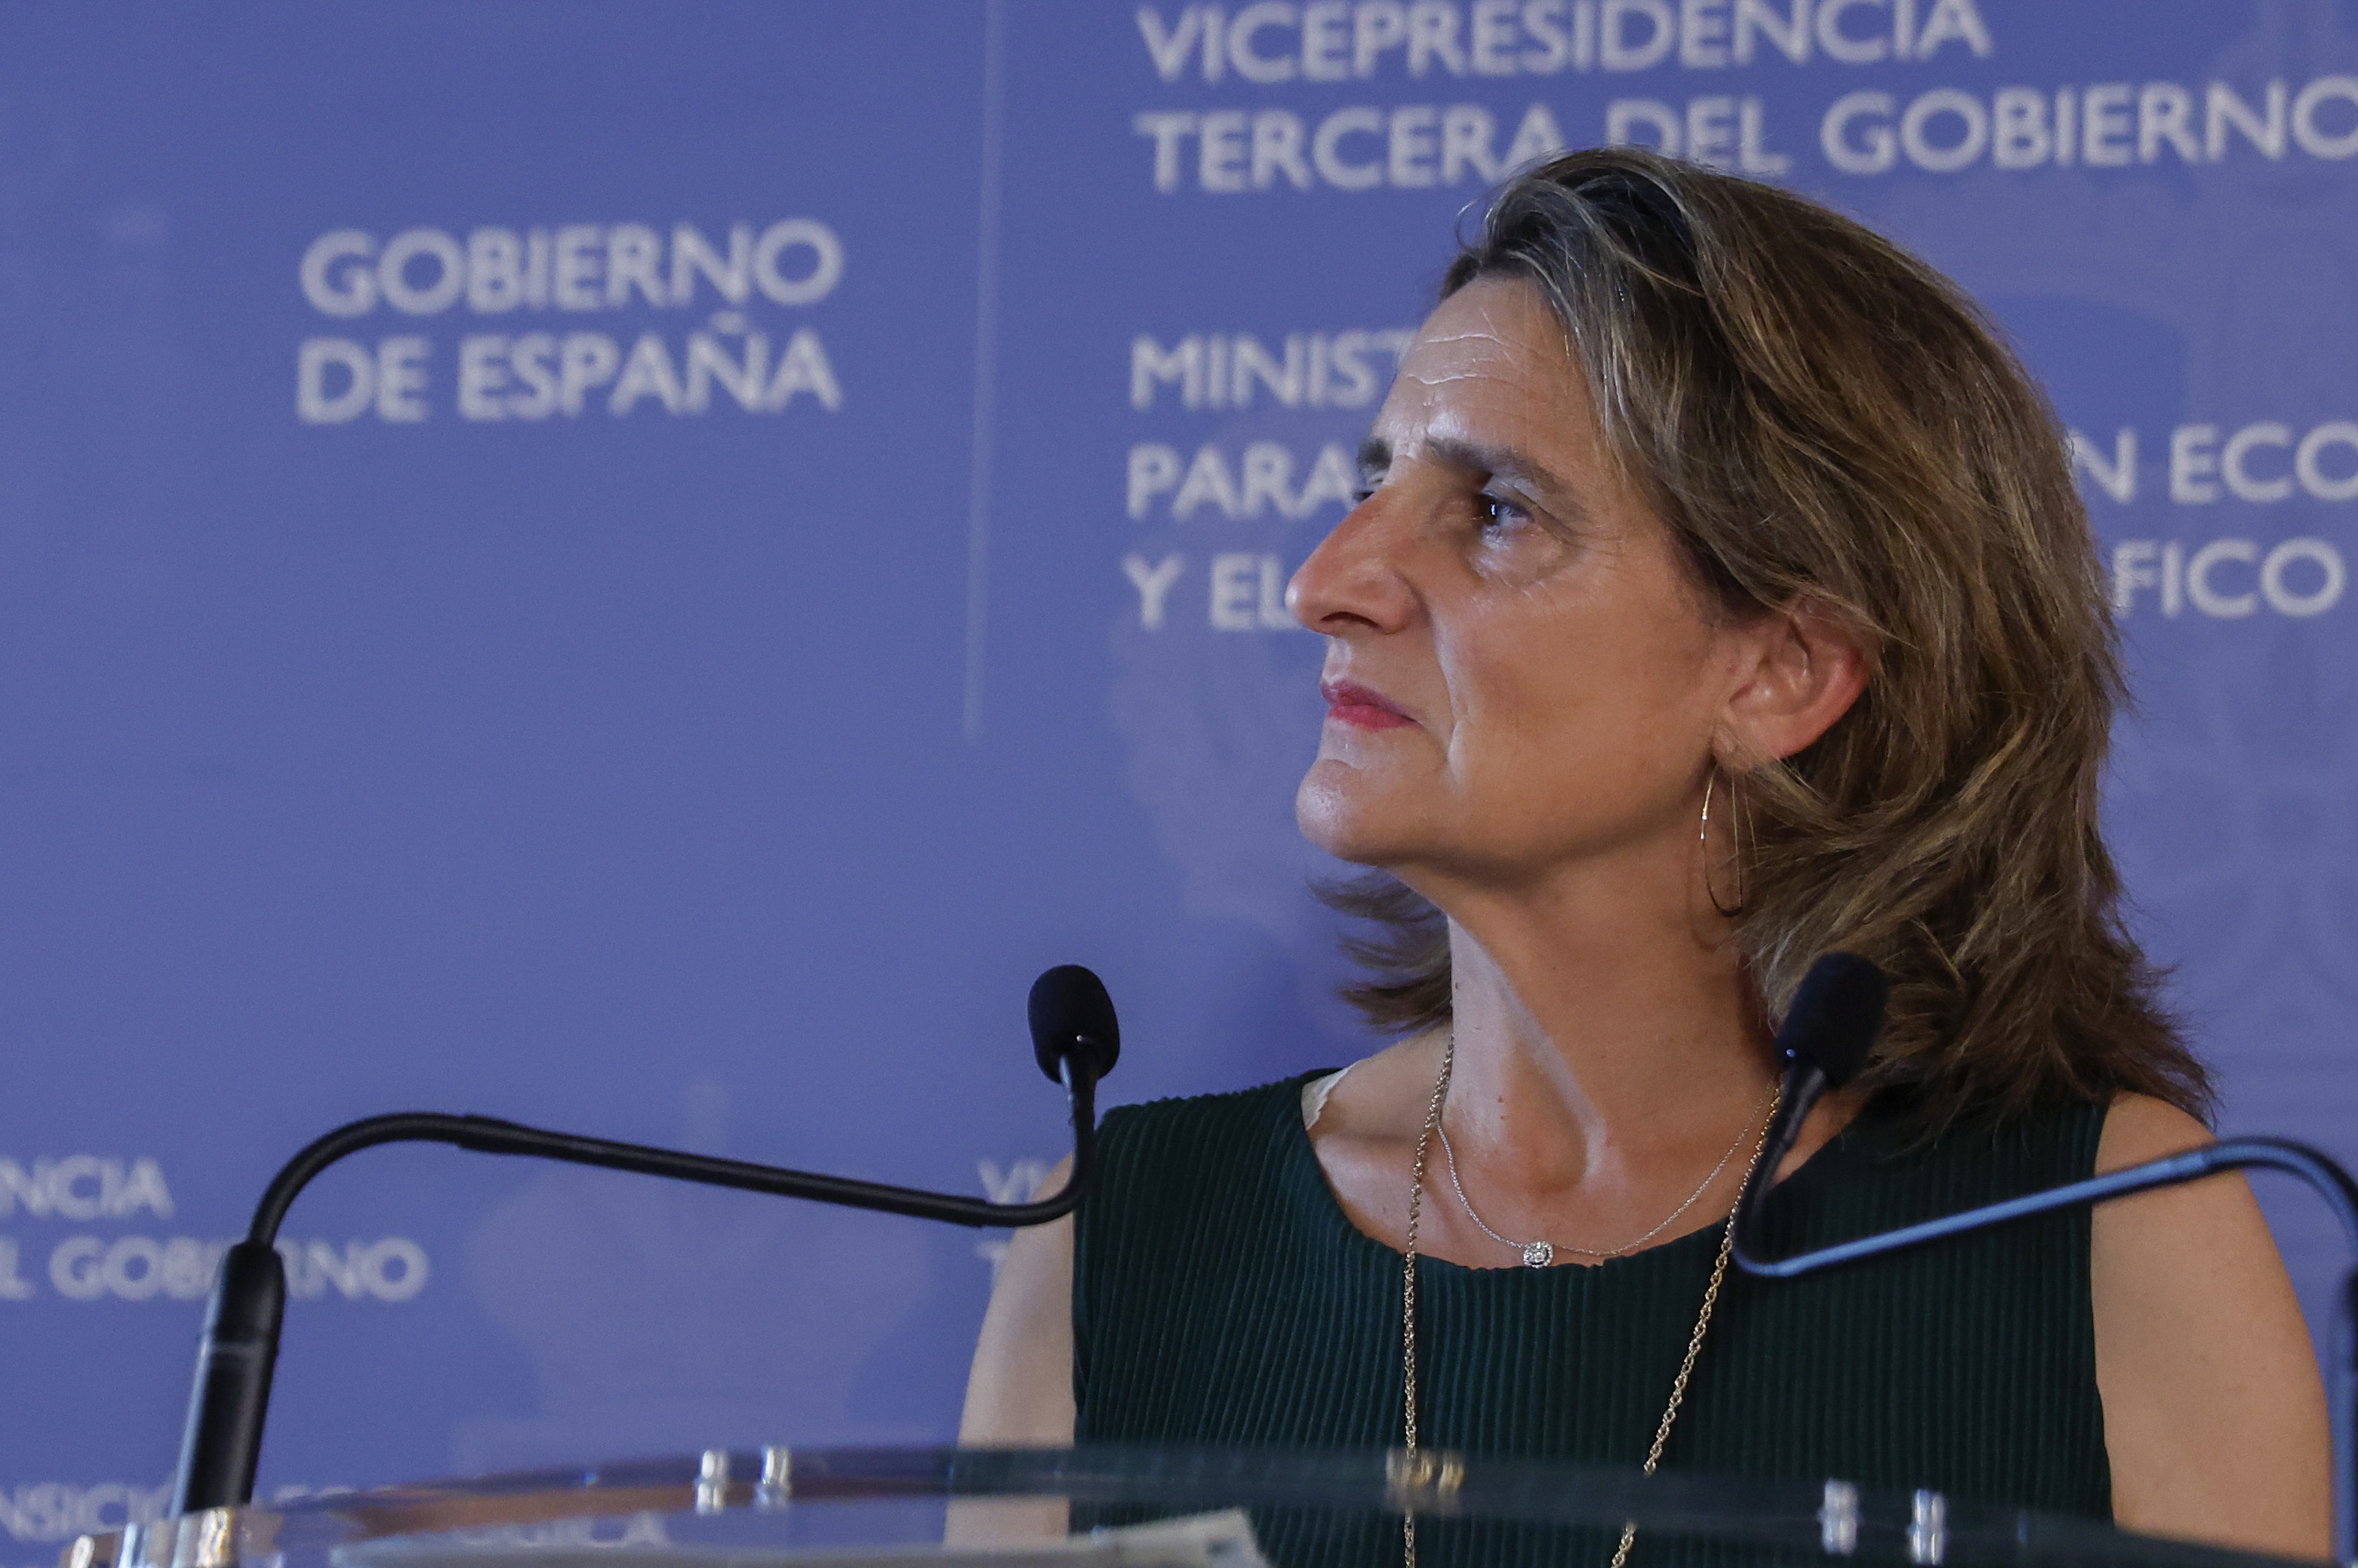 La ministra de Transicin Ecolgica, Teresa Ribera.